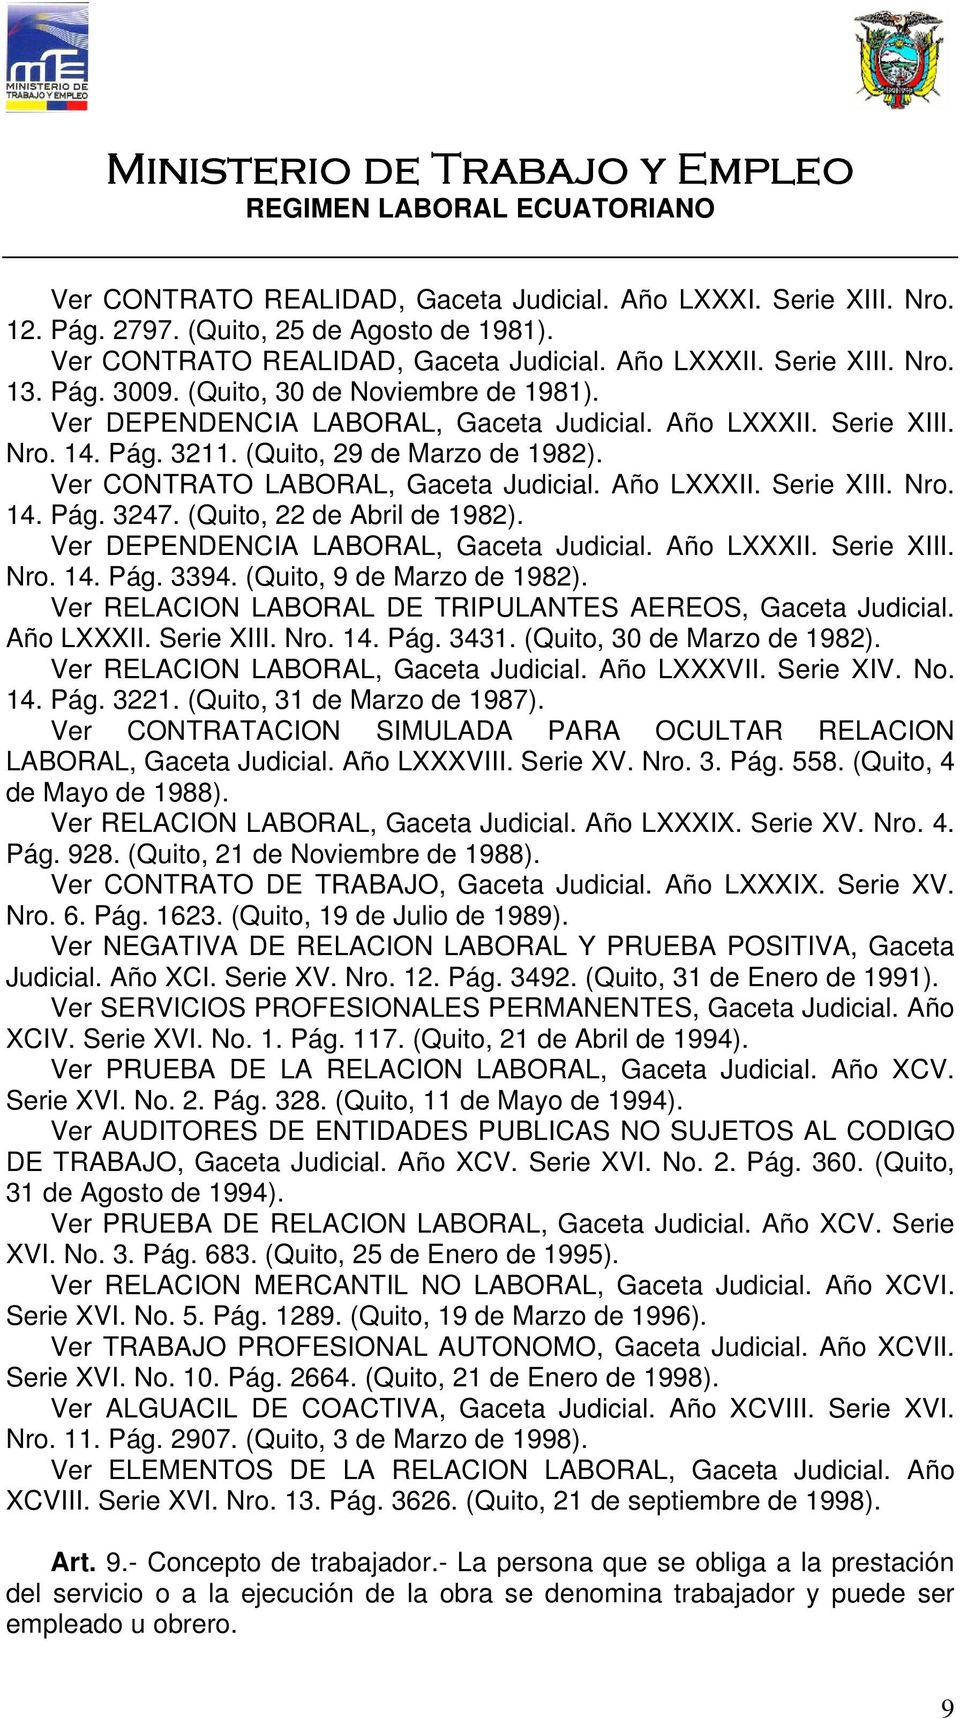 (Quito, 22 de Abril de 1982). Ver DEPENDENCIA LABORAL, Gaceta Judicial. Año LXXXII. Serie XIII. Nro. 14. Pág. 3394. (Quito, 9 de Marzo de 1982).